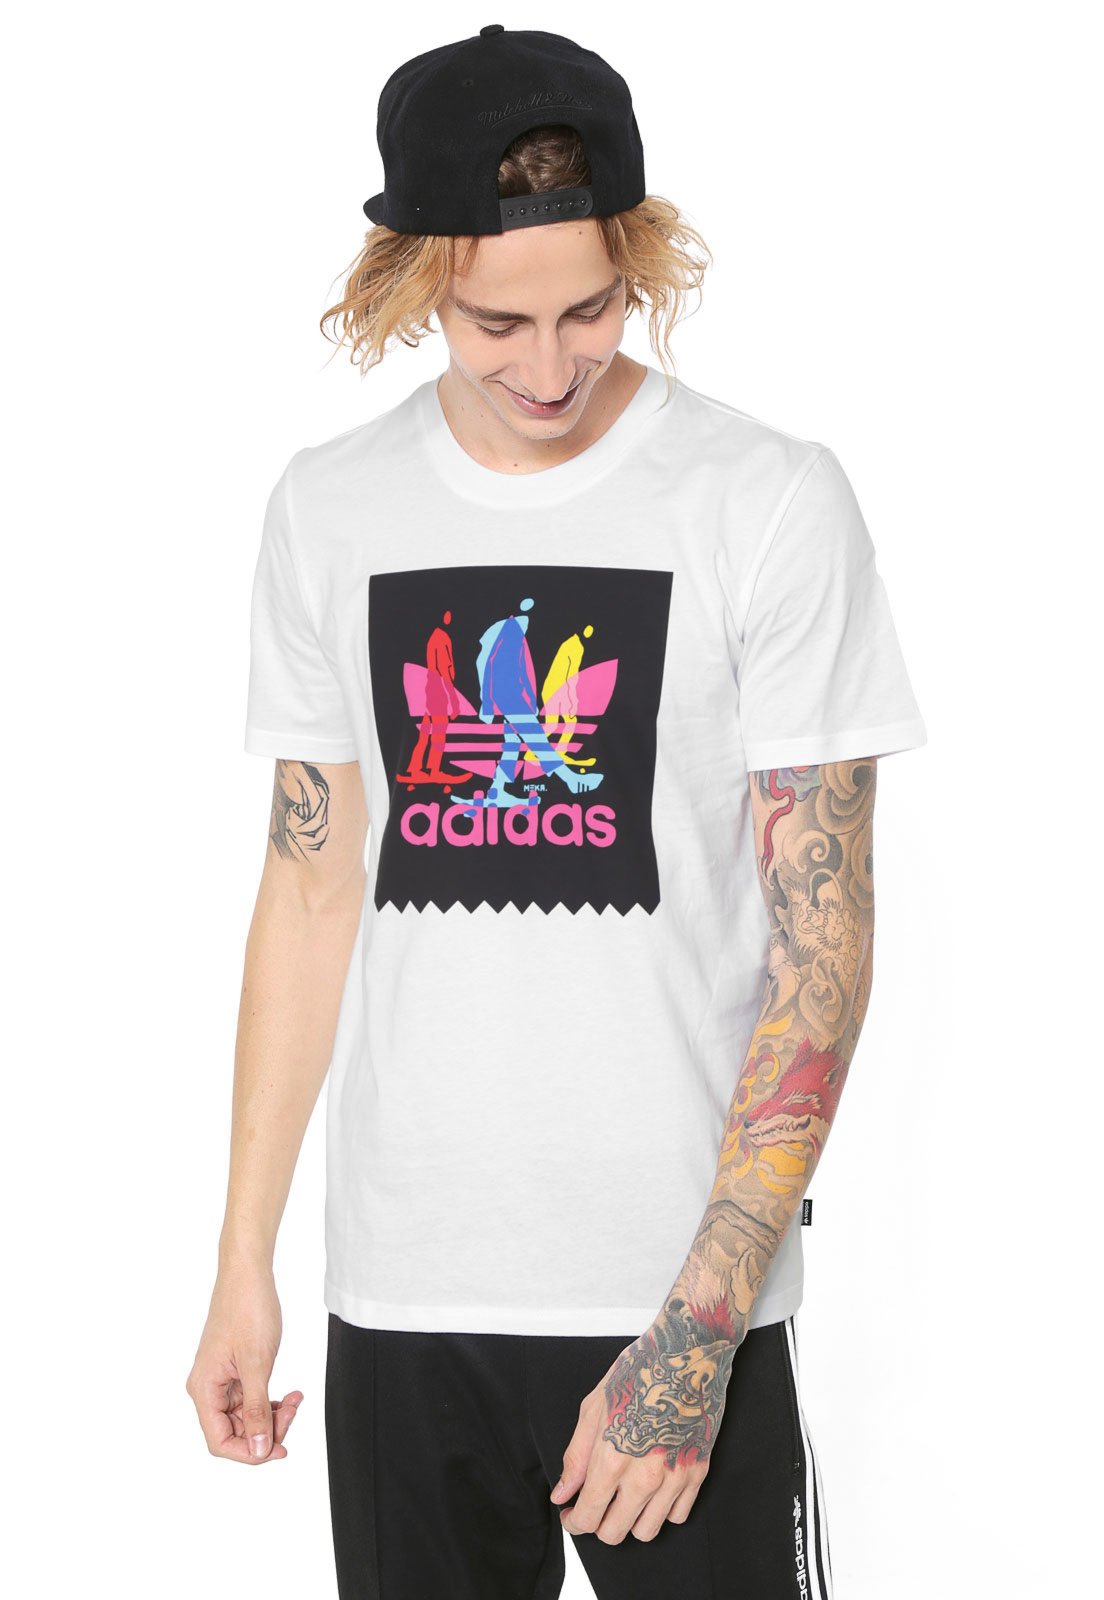 camiseta adidas skateboarding